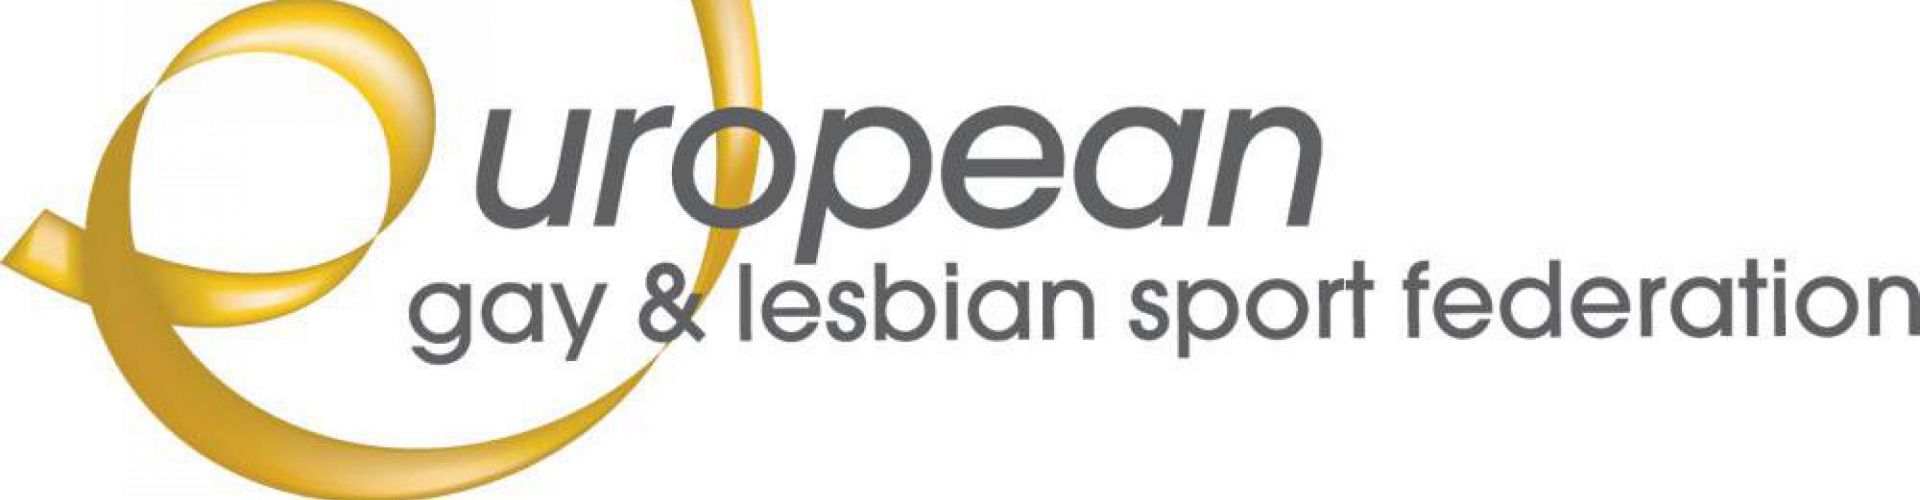 EGLSF - European Gay and Lesbian Sport Federation's profile